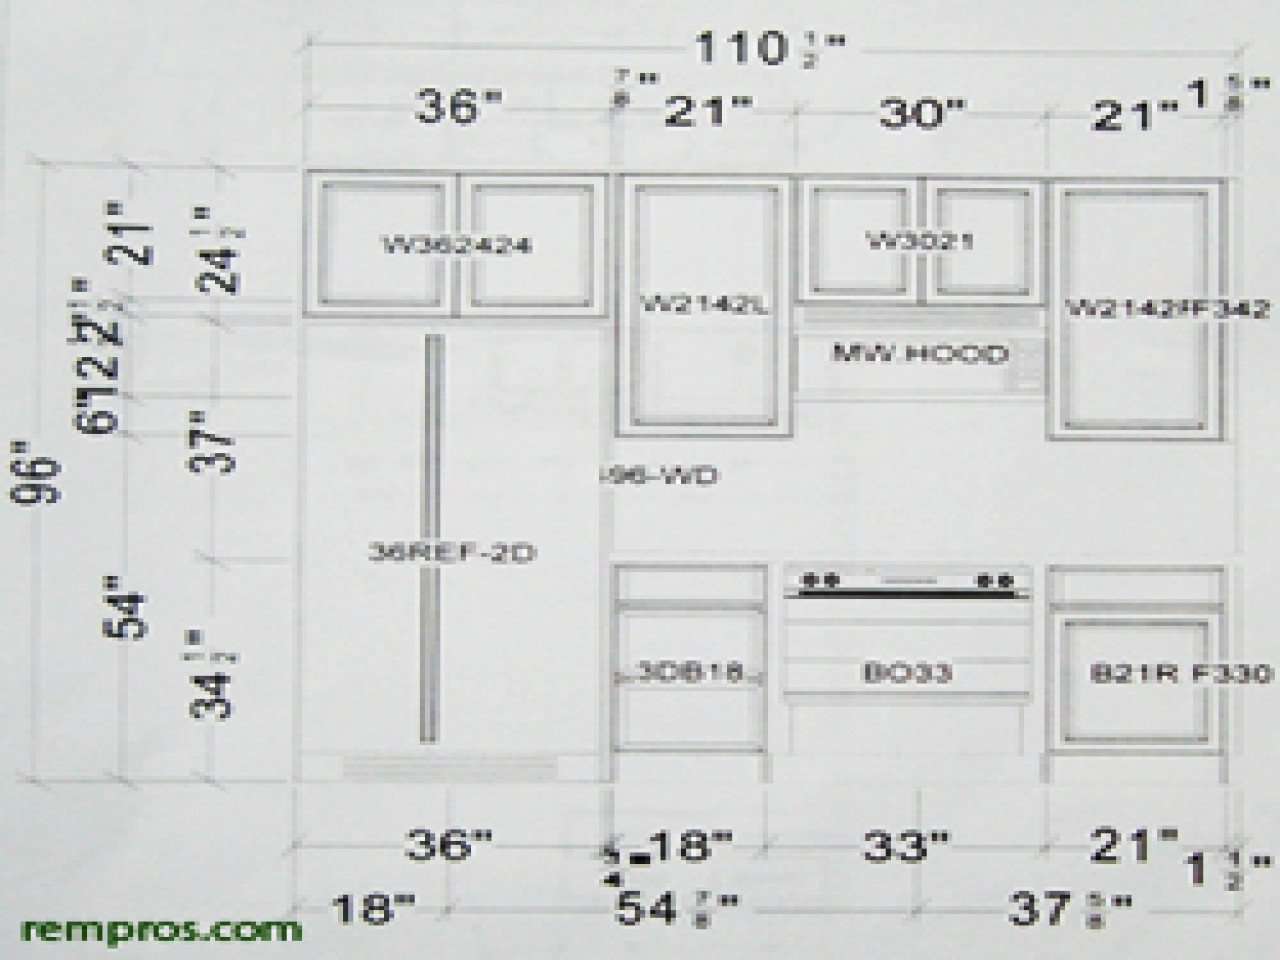 Best ideas about Standard Kitchen Cabinet Sizes Chart
. Save or Pin Standard Kitchen Cabinet Door Sizes Now.